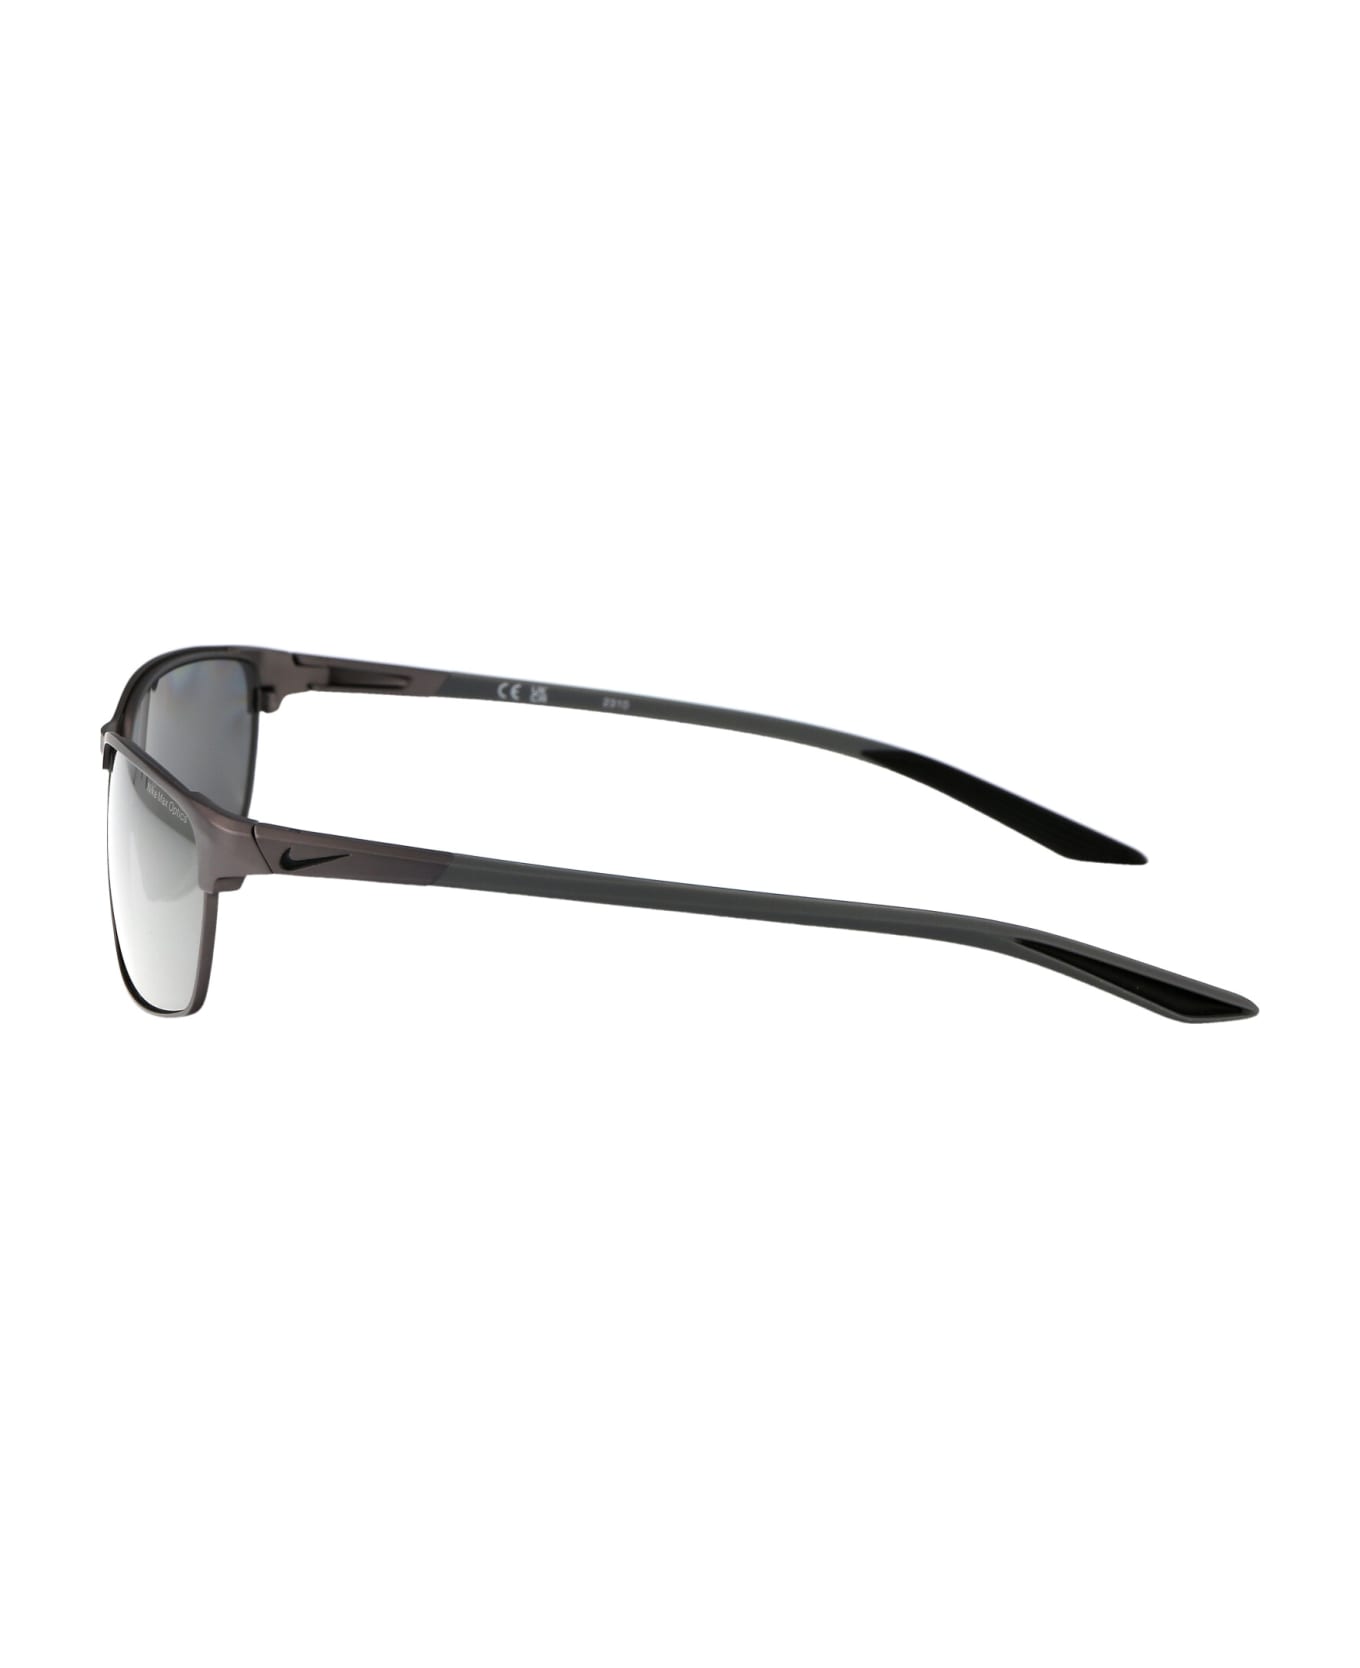 Nike Modern Metal Sunglasses - 918 GREY W/ SILVER FLASH SATIN GUNMETAL サングラス